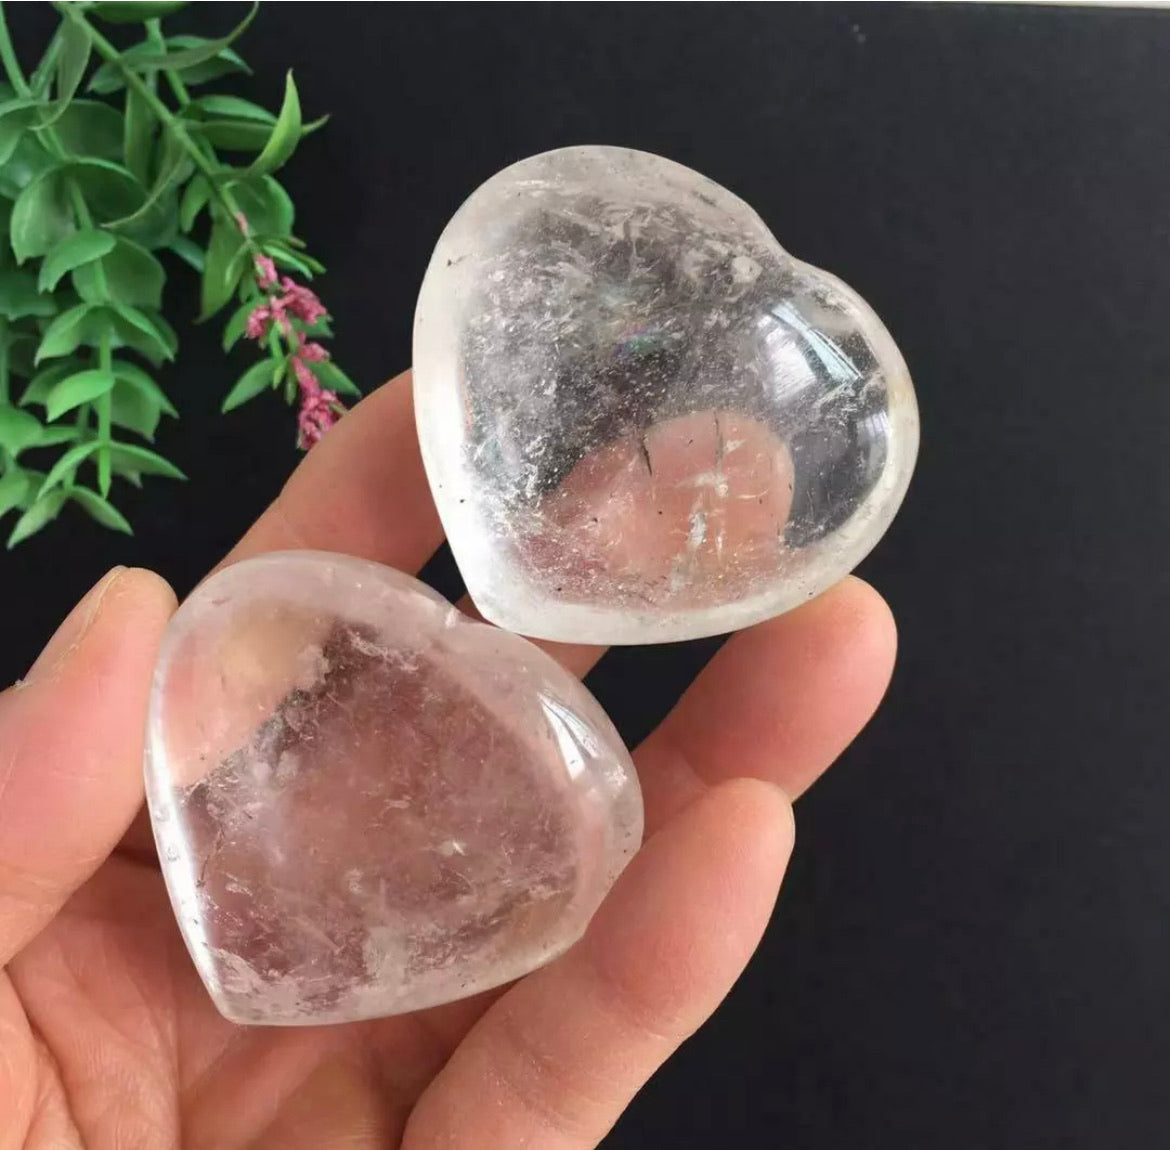 Clear Quartz Heart Shaped Carving Crystal Stone Polished Healing gemstone reiki semiprecious